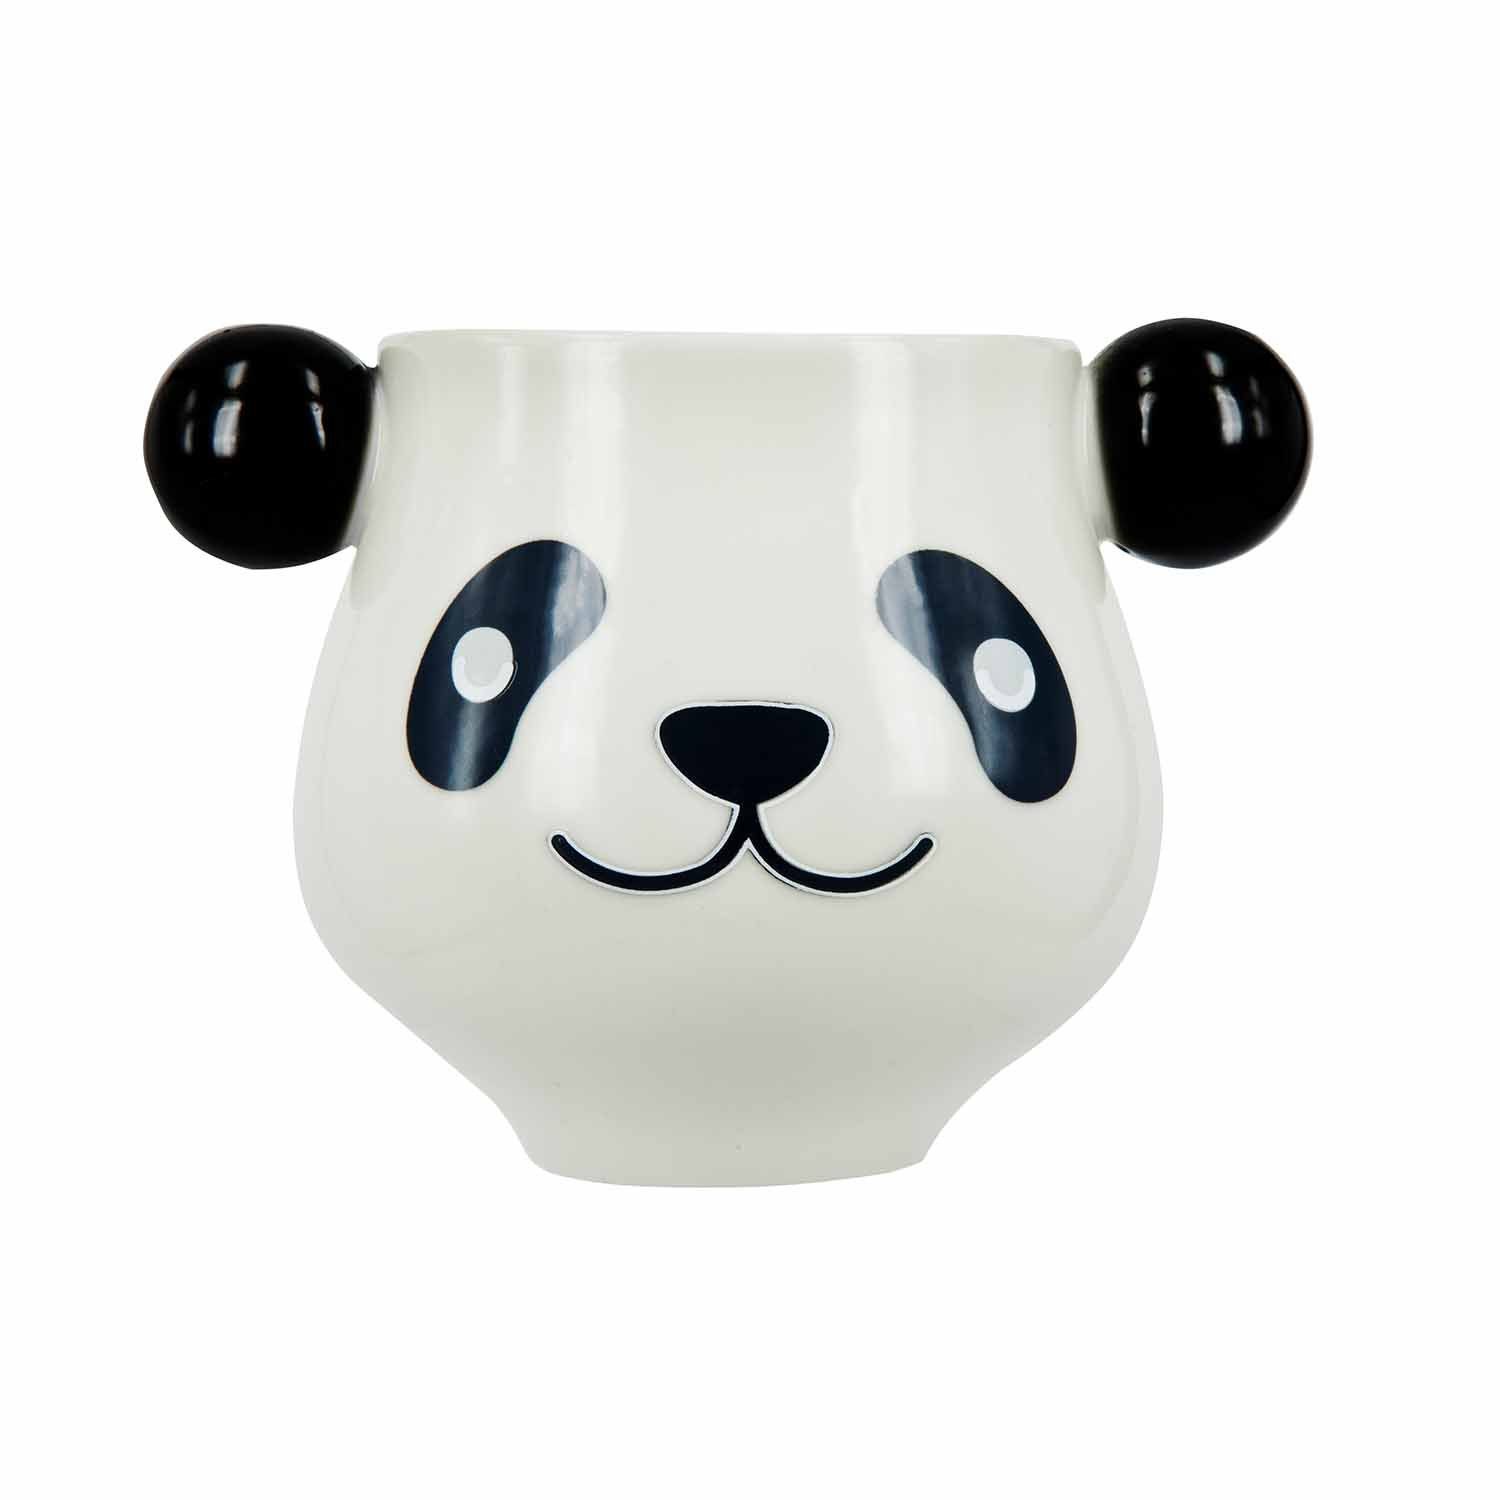 Farbwechsel, Thumbs Up "Panda - Mug" mit Farbwechseleffekt Tasse